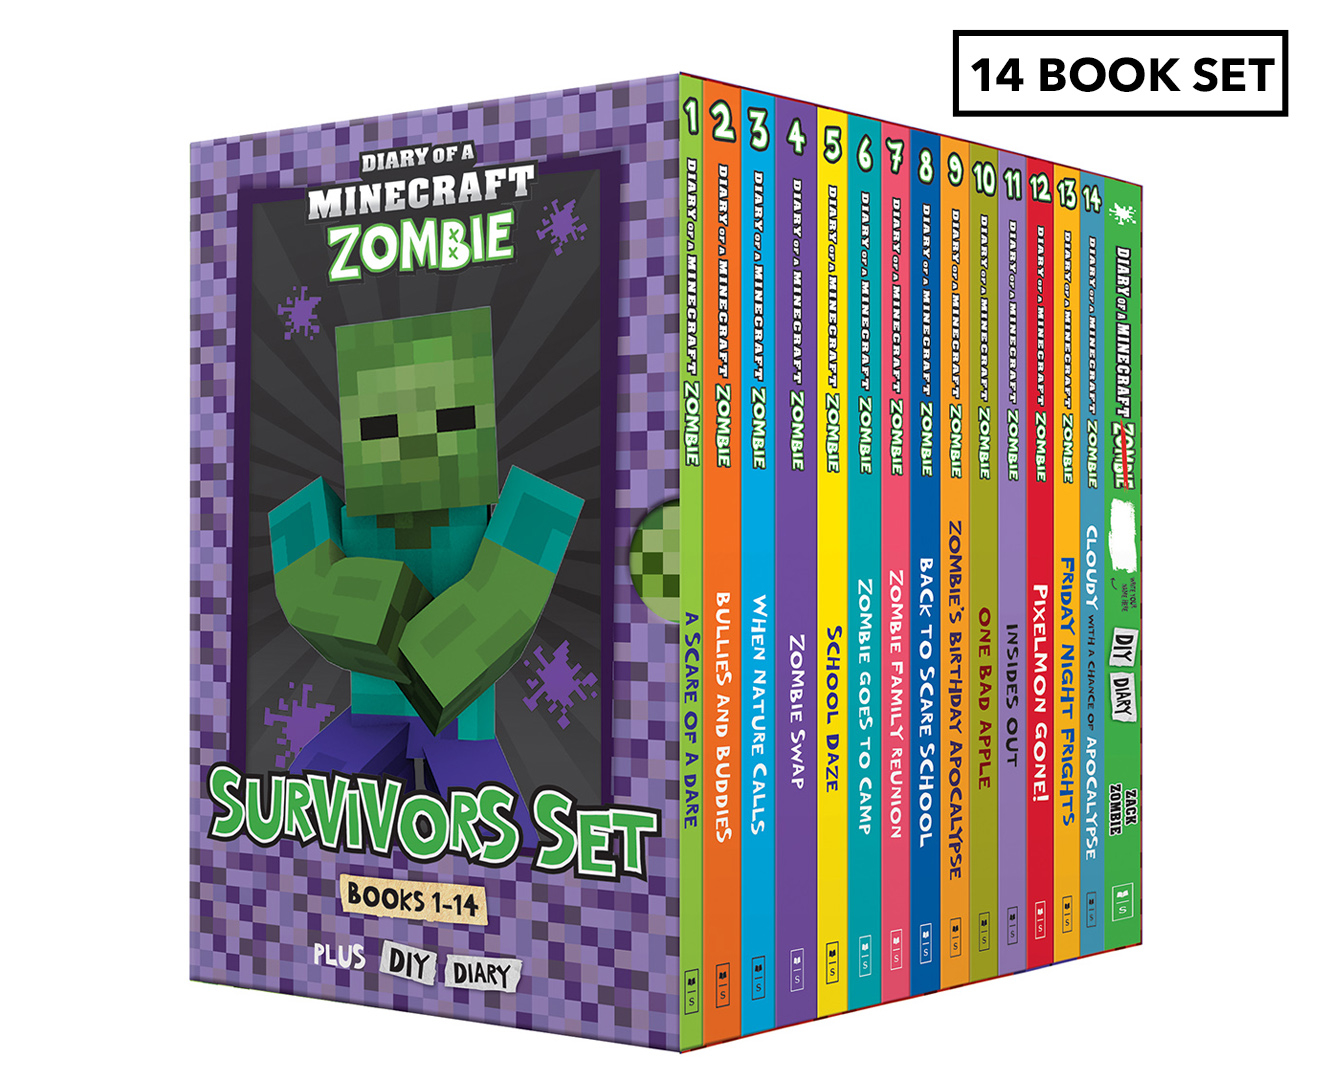 Diary Of A Minecraft Zombie Survivors Box Set 14 Books by Zack Zombie